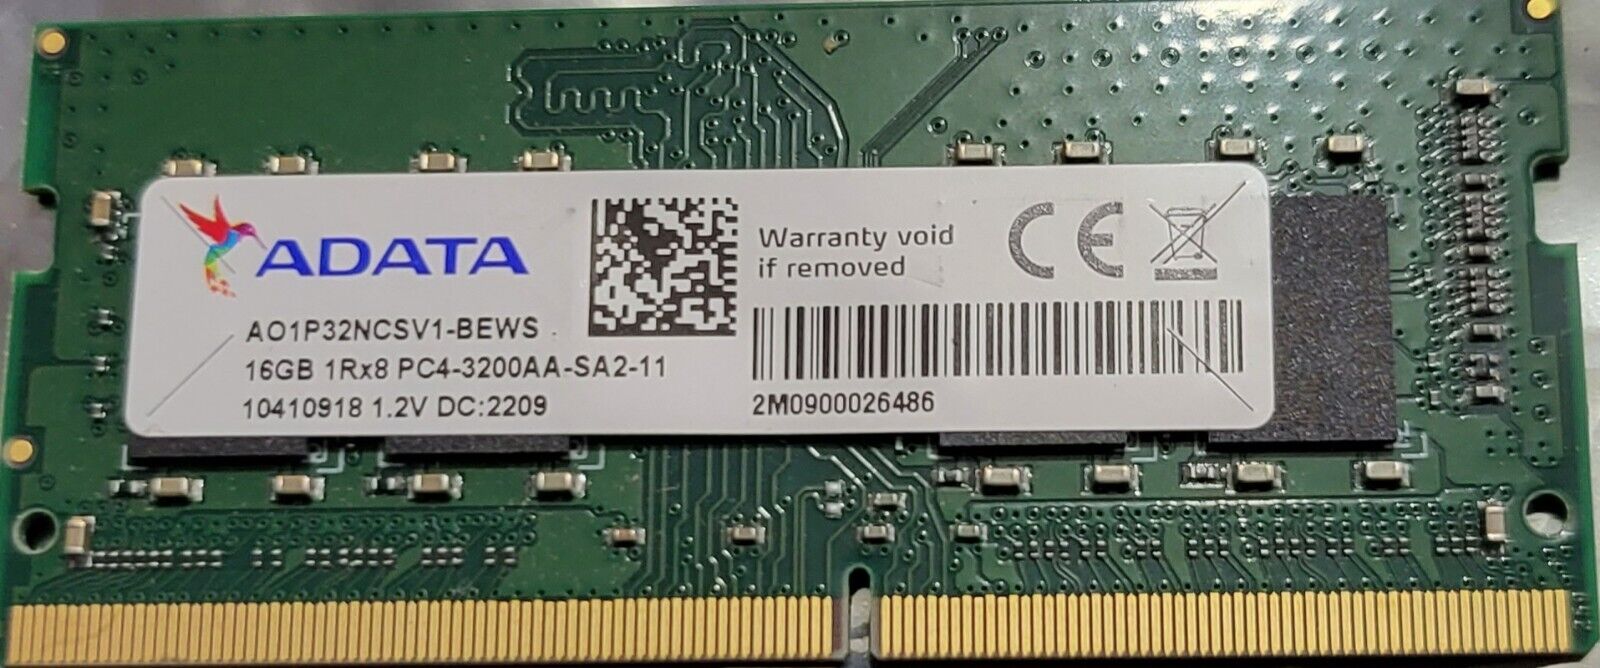 ADATA 16GB 1Rx8 DDR4 PC4-3200AA Laptop Memory Ram AO1P32NCSV1